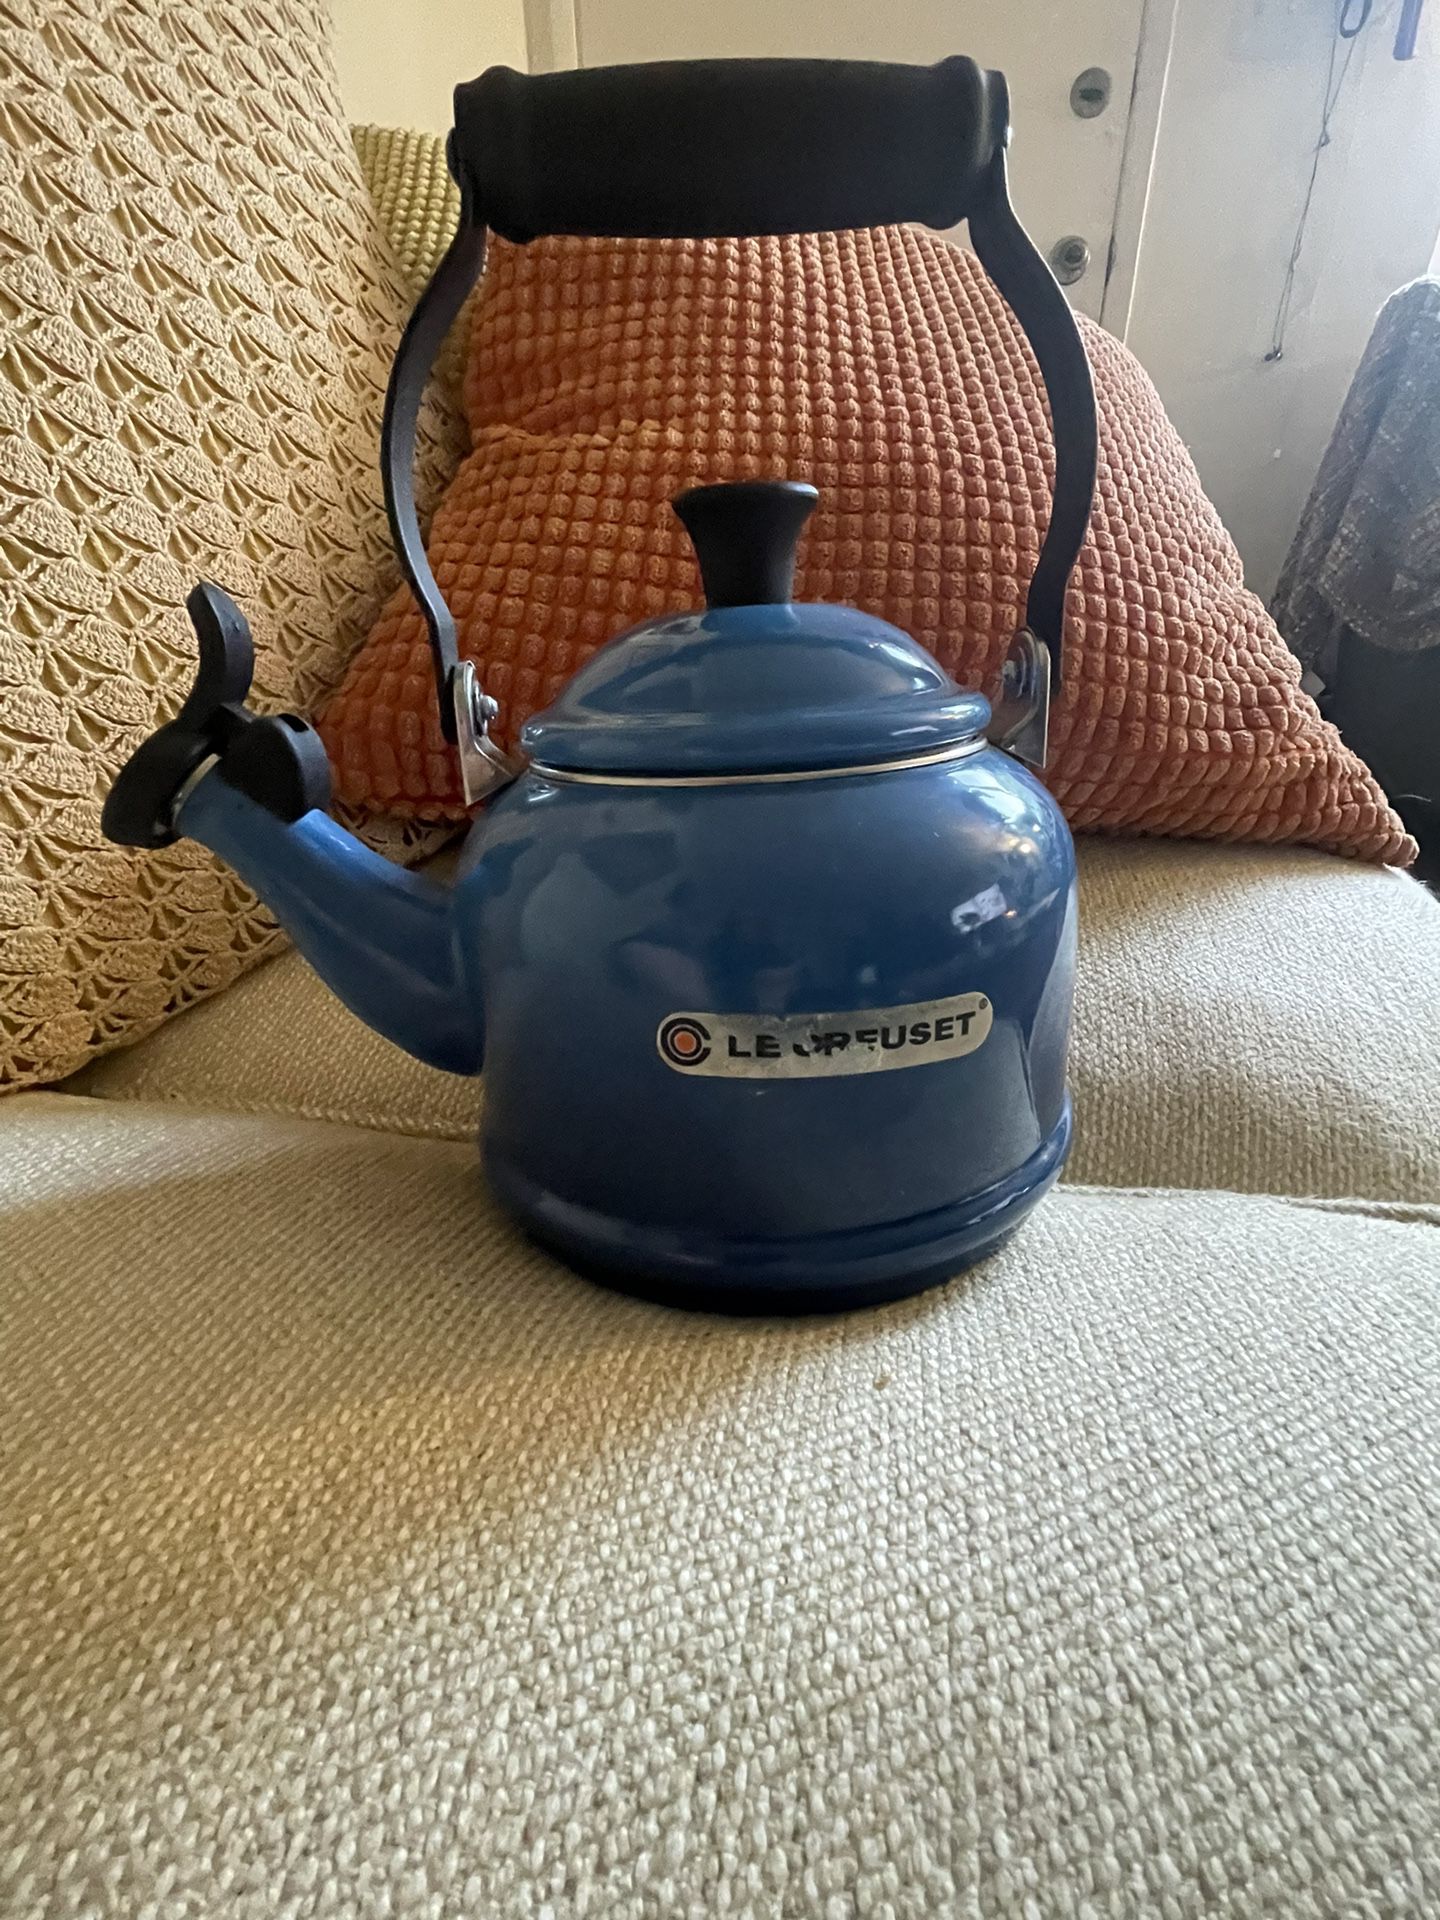 Le Cruiser Teapot 1.1 Liter 1.2quart